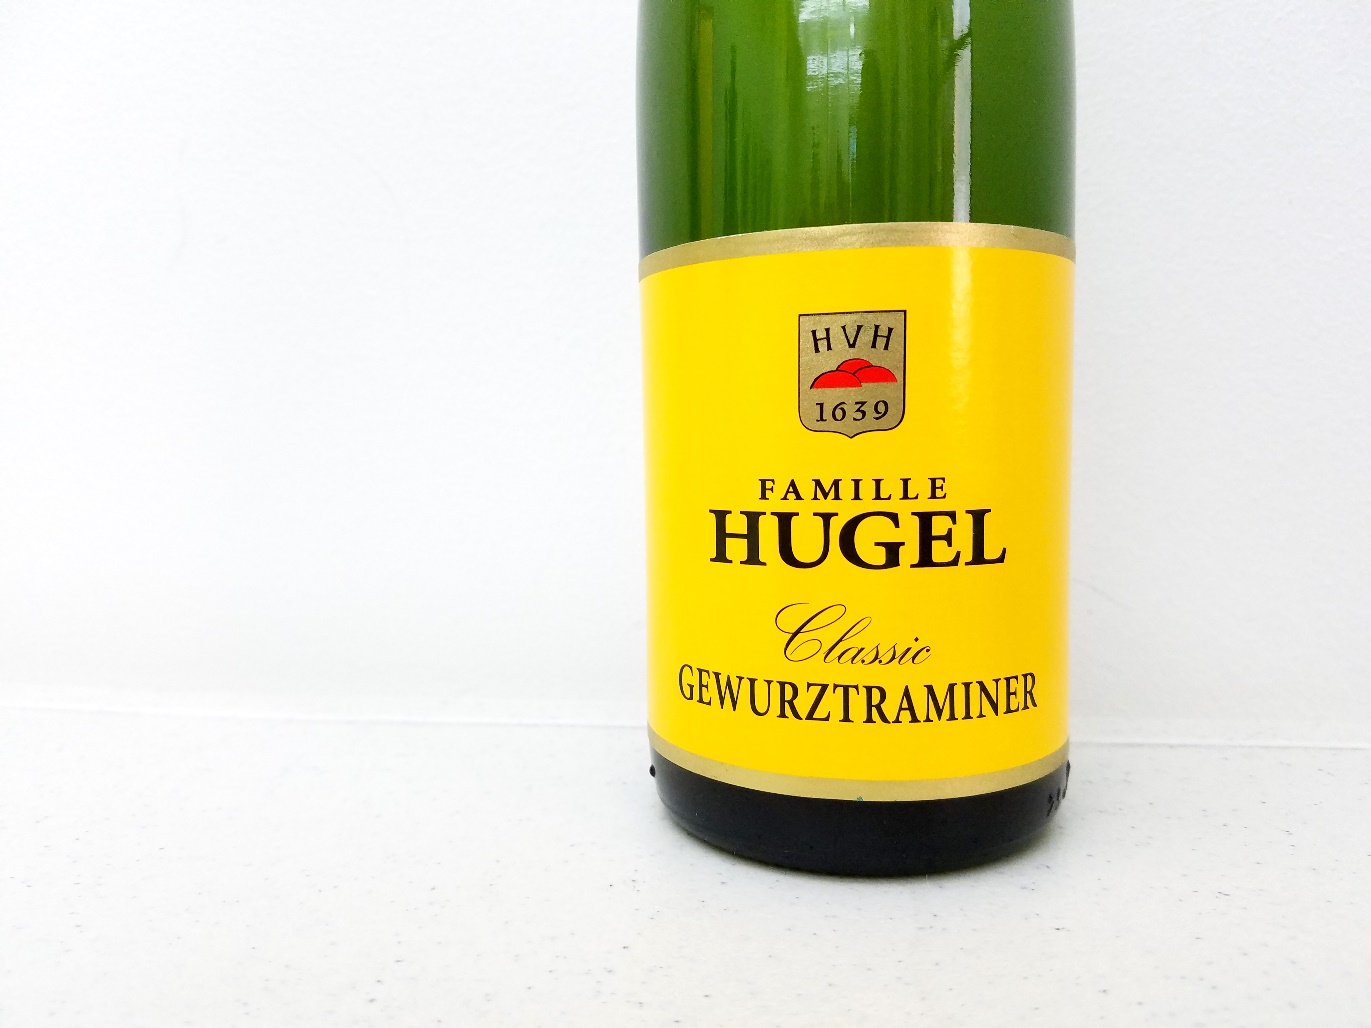 Famille Hugel, Classic Gewurztraminer 2013, Alsace, France, Wine Casual